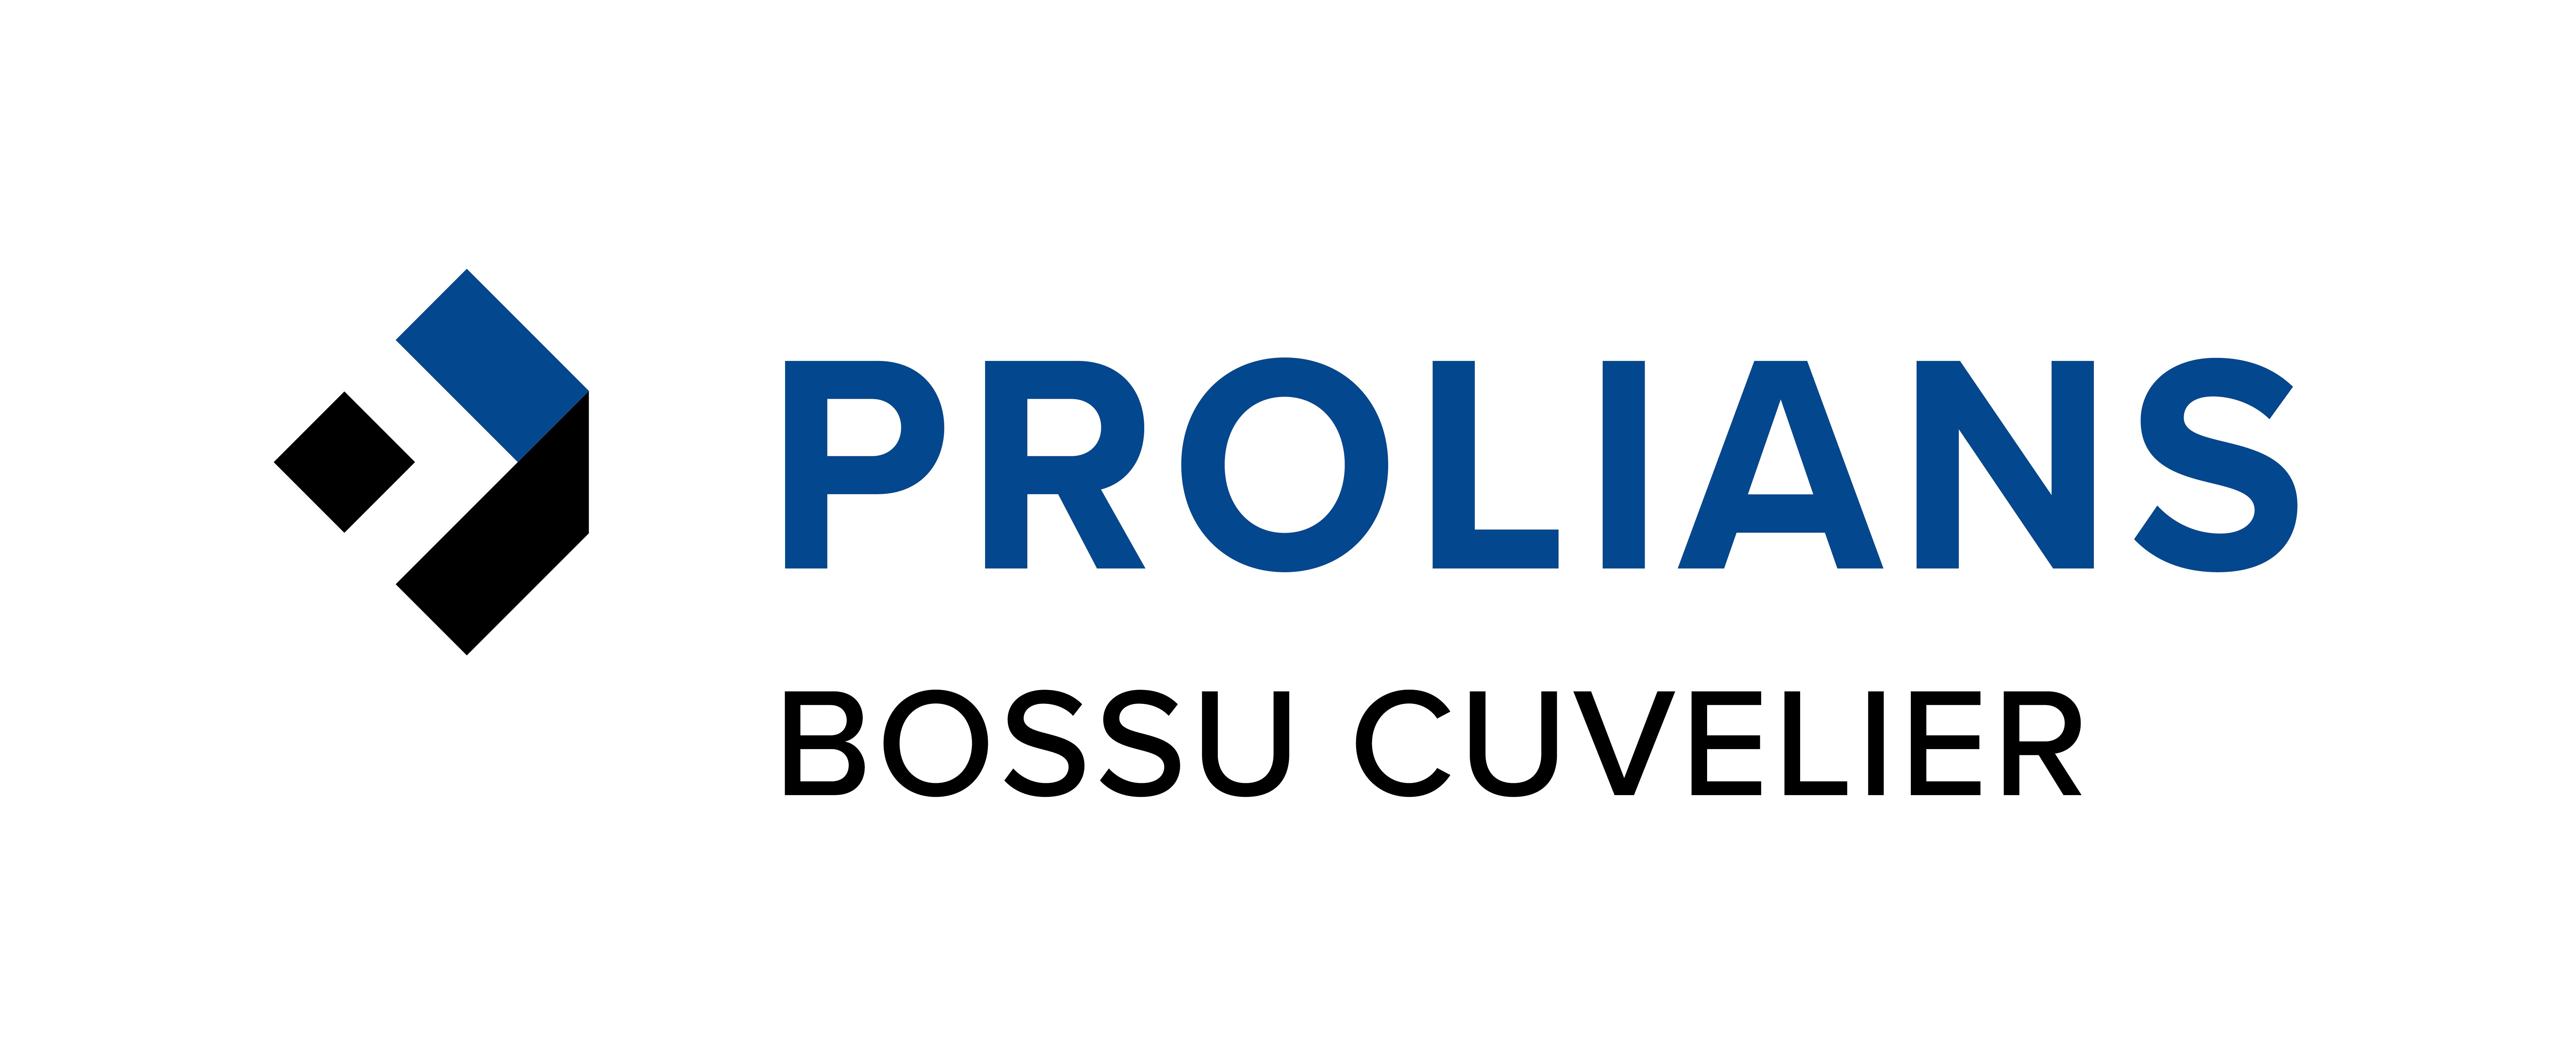 PROLIANS BOSSU-CUVELIER